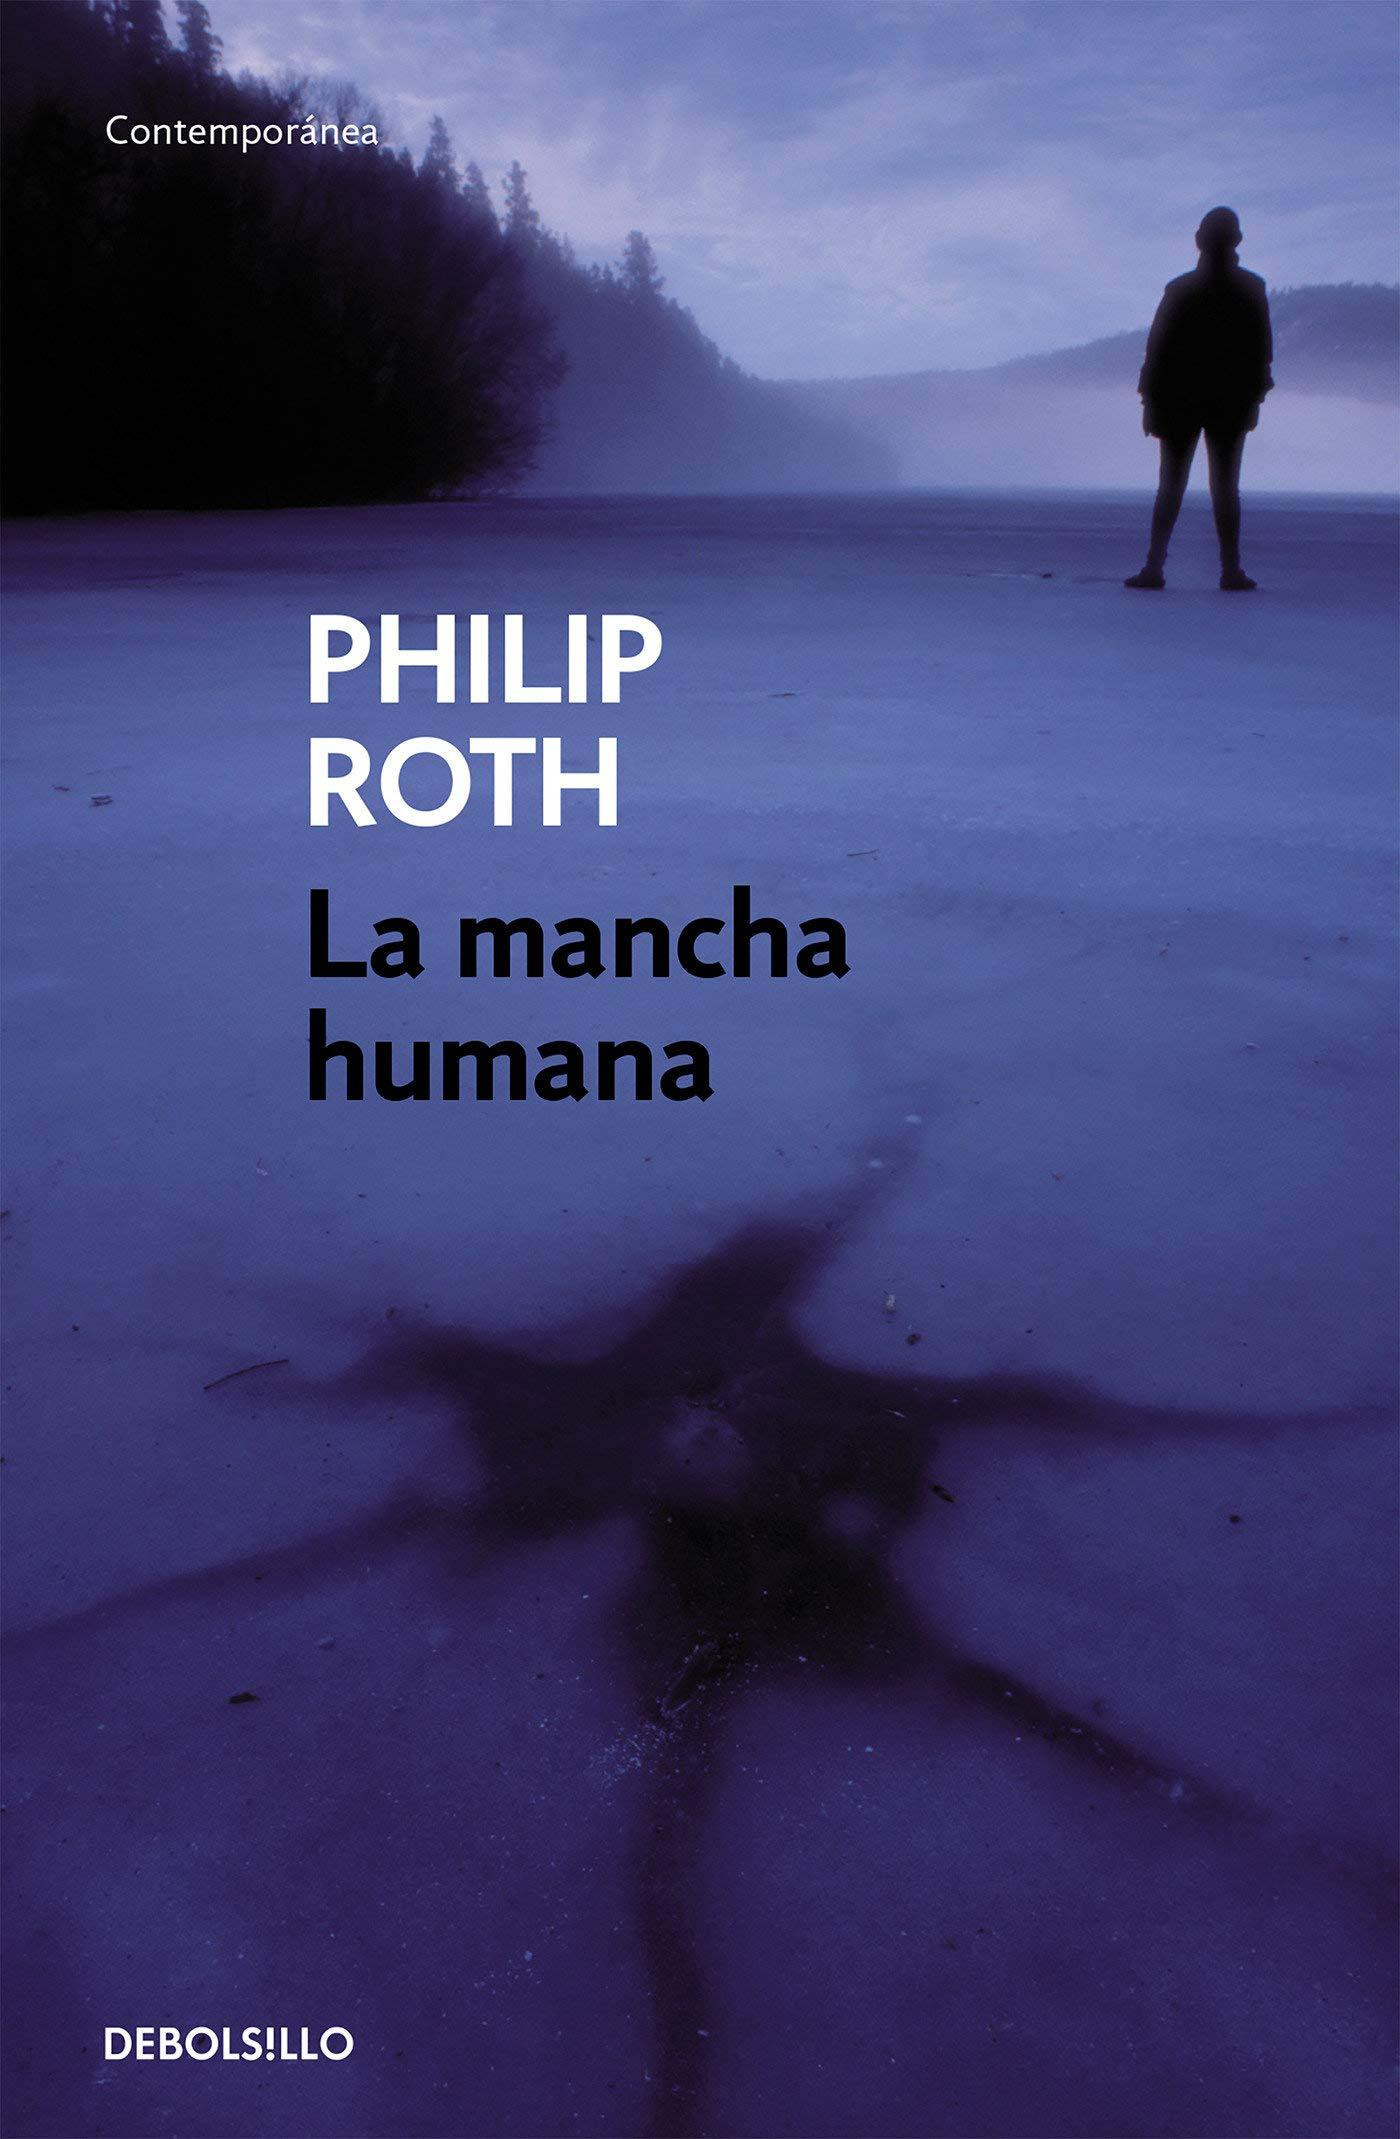 La mancha humana, Philip Roth / DEBOLSILLO